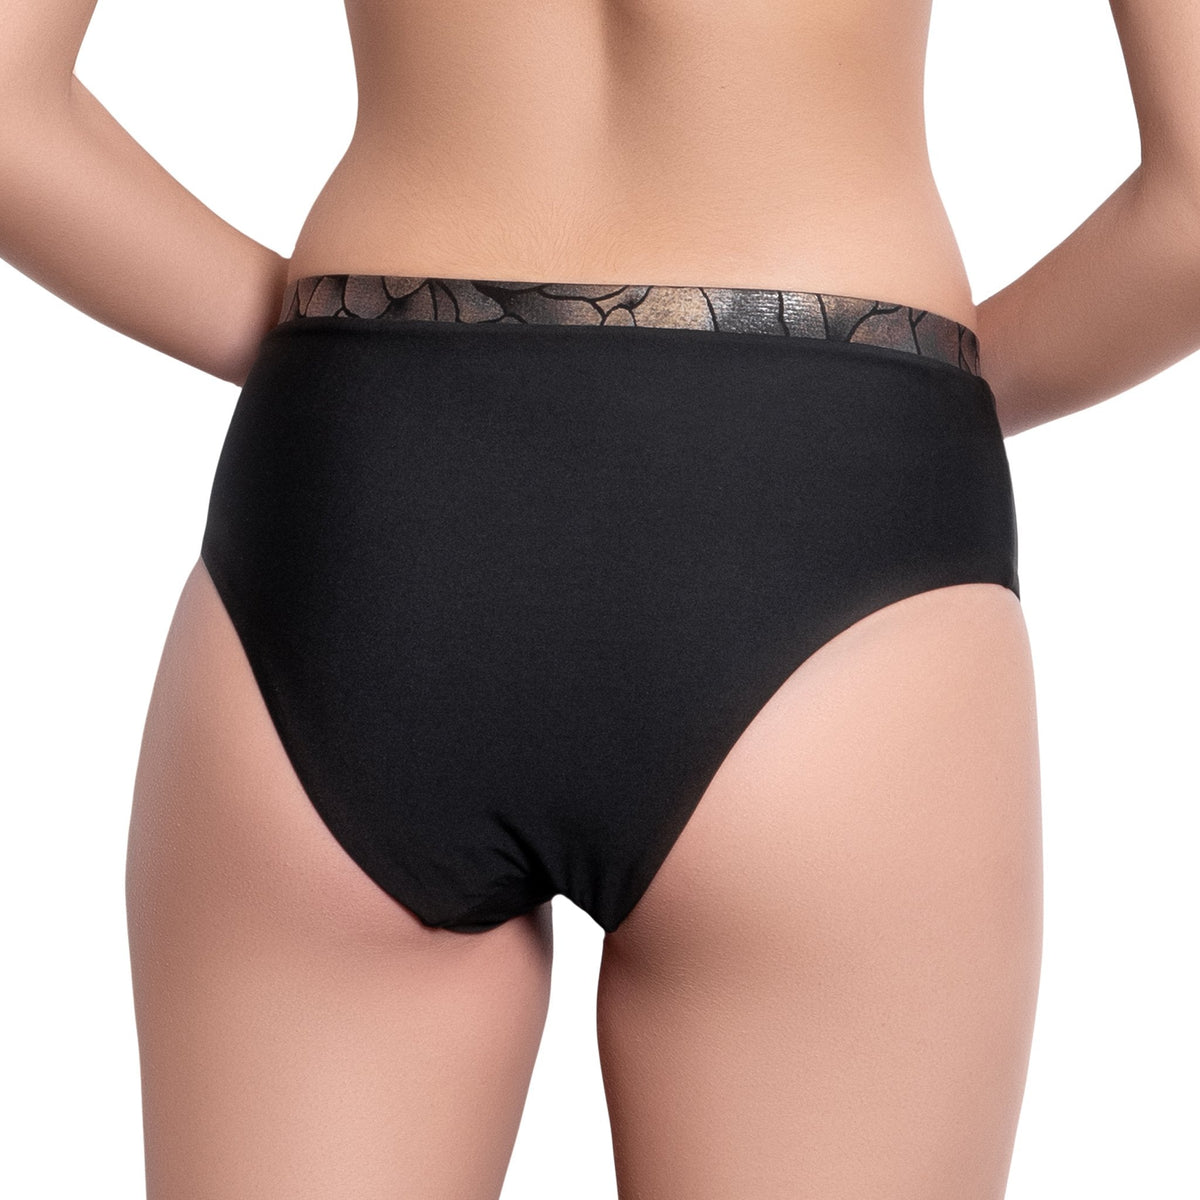 ISABELLE high rise panty, bronze brocade waistband black bikini bottom  by ALMA swimwear ‚Äì back view 